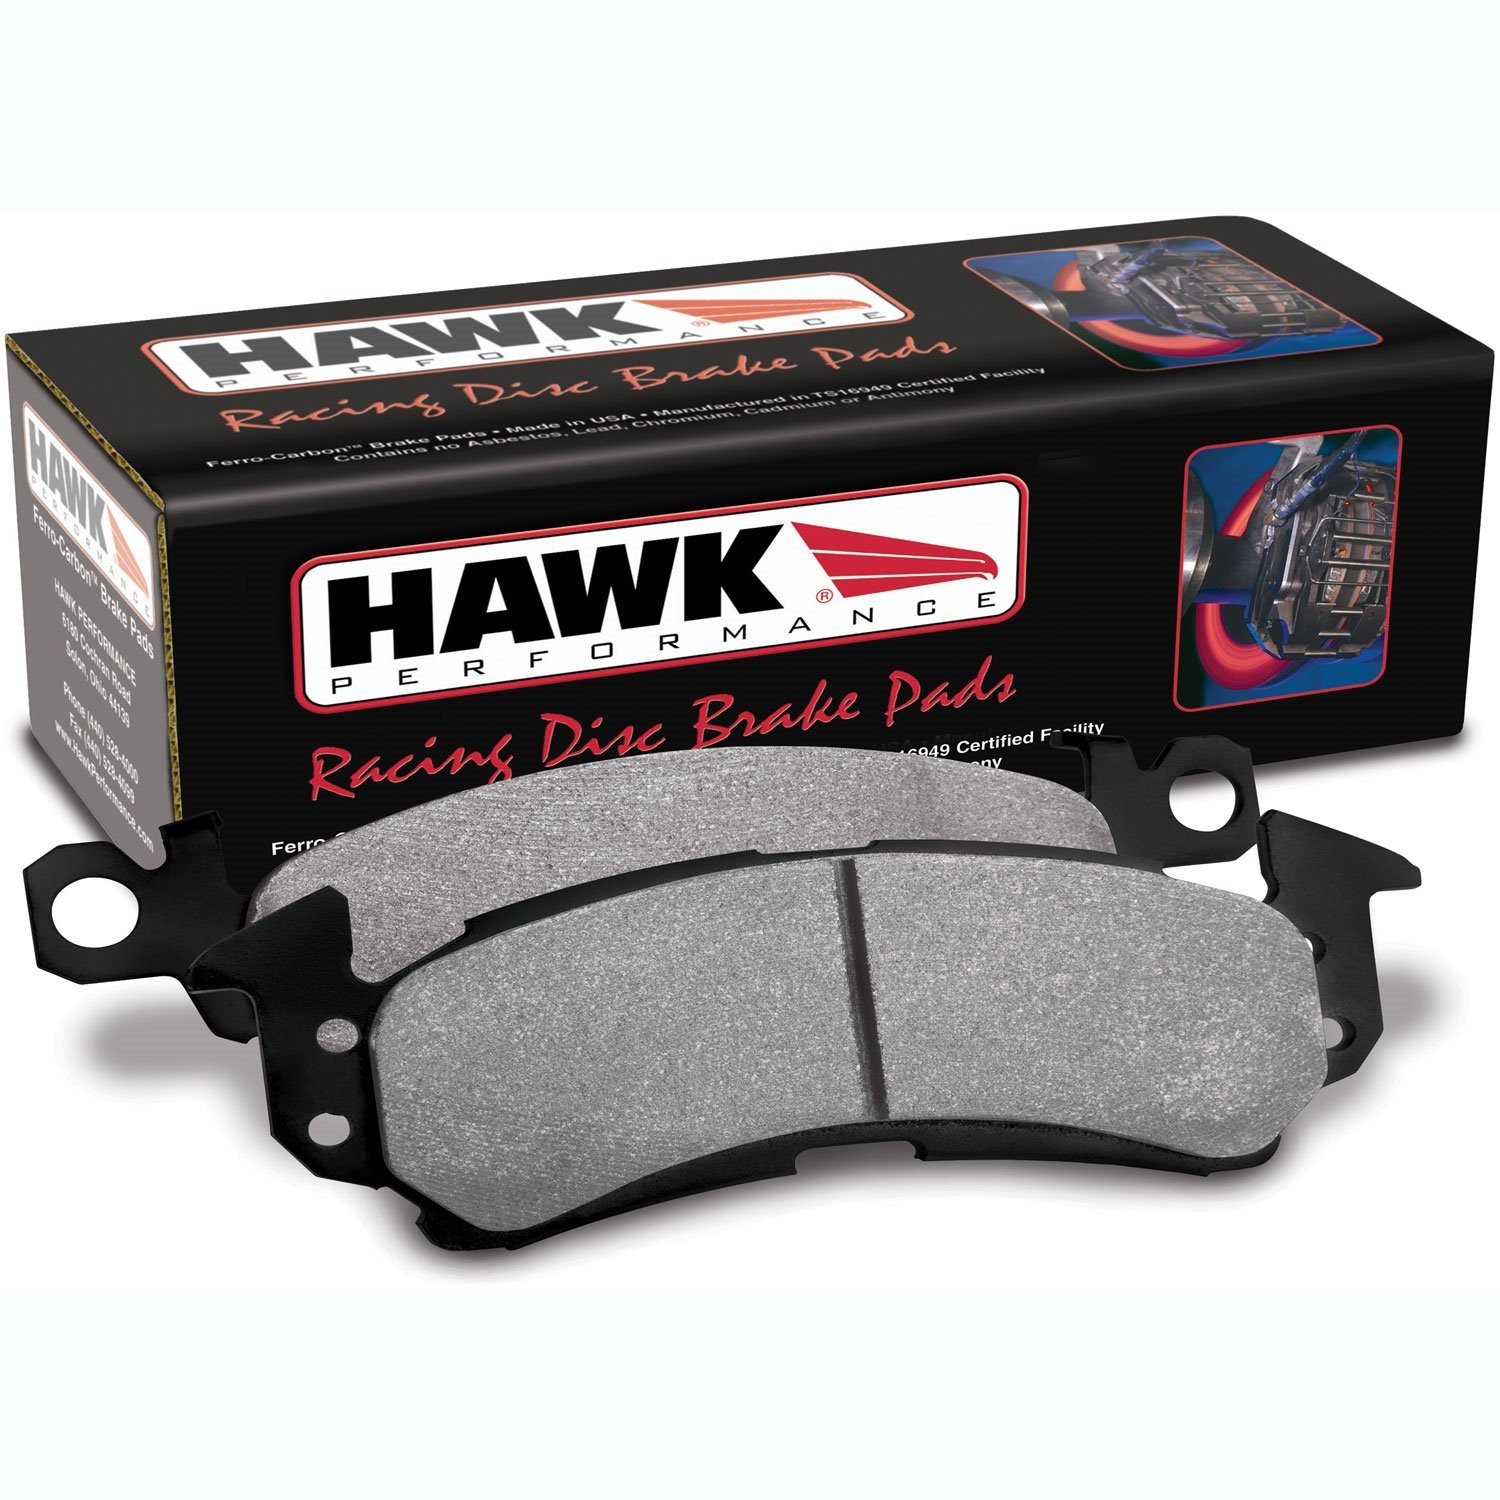 Disc Brake Pad HT-10 w/0.642 Thickness